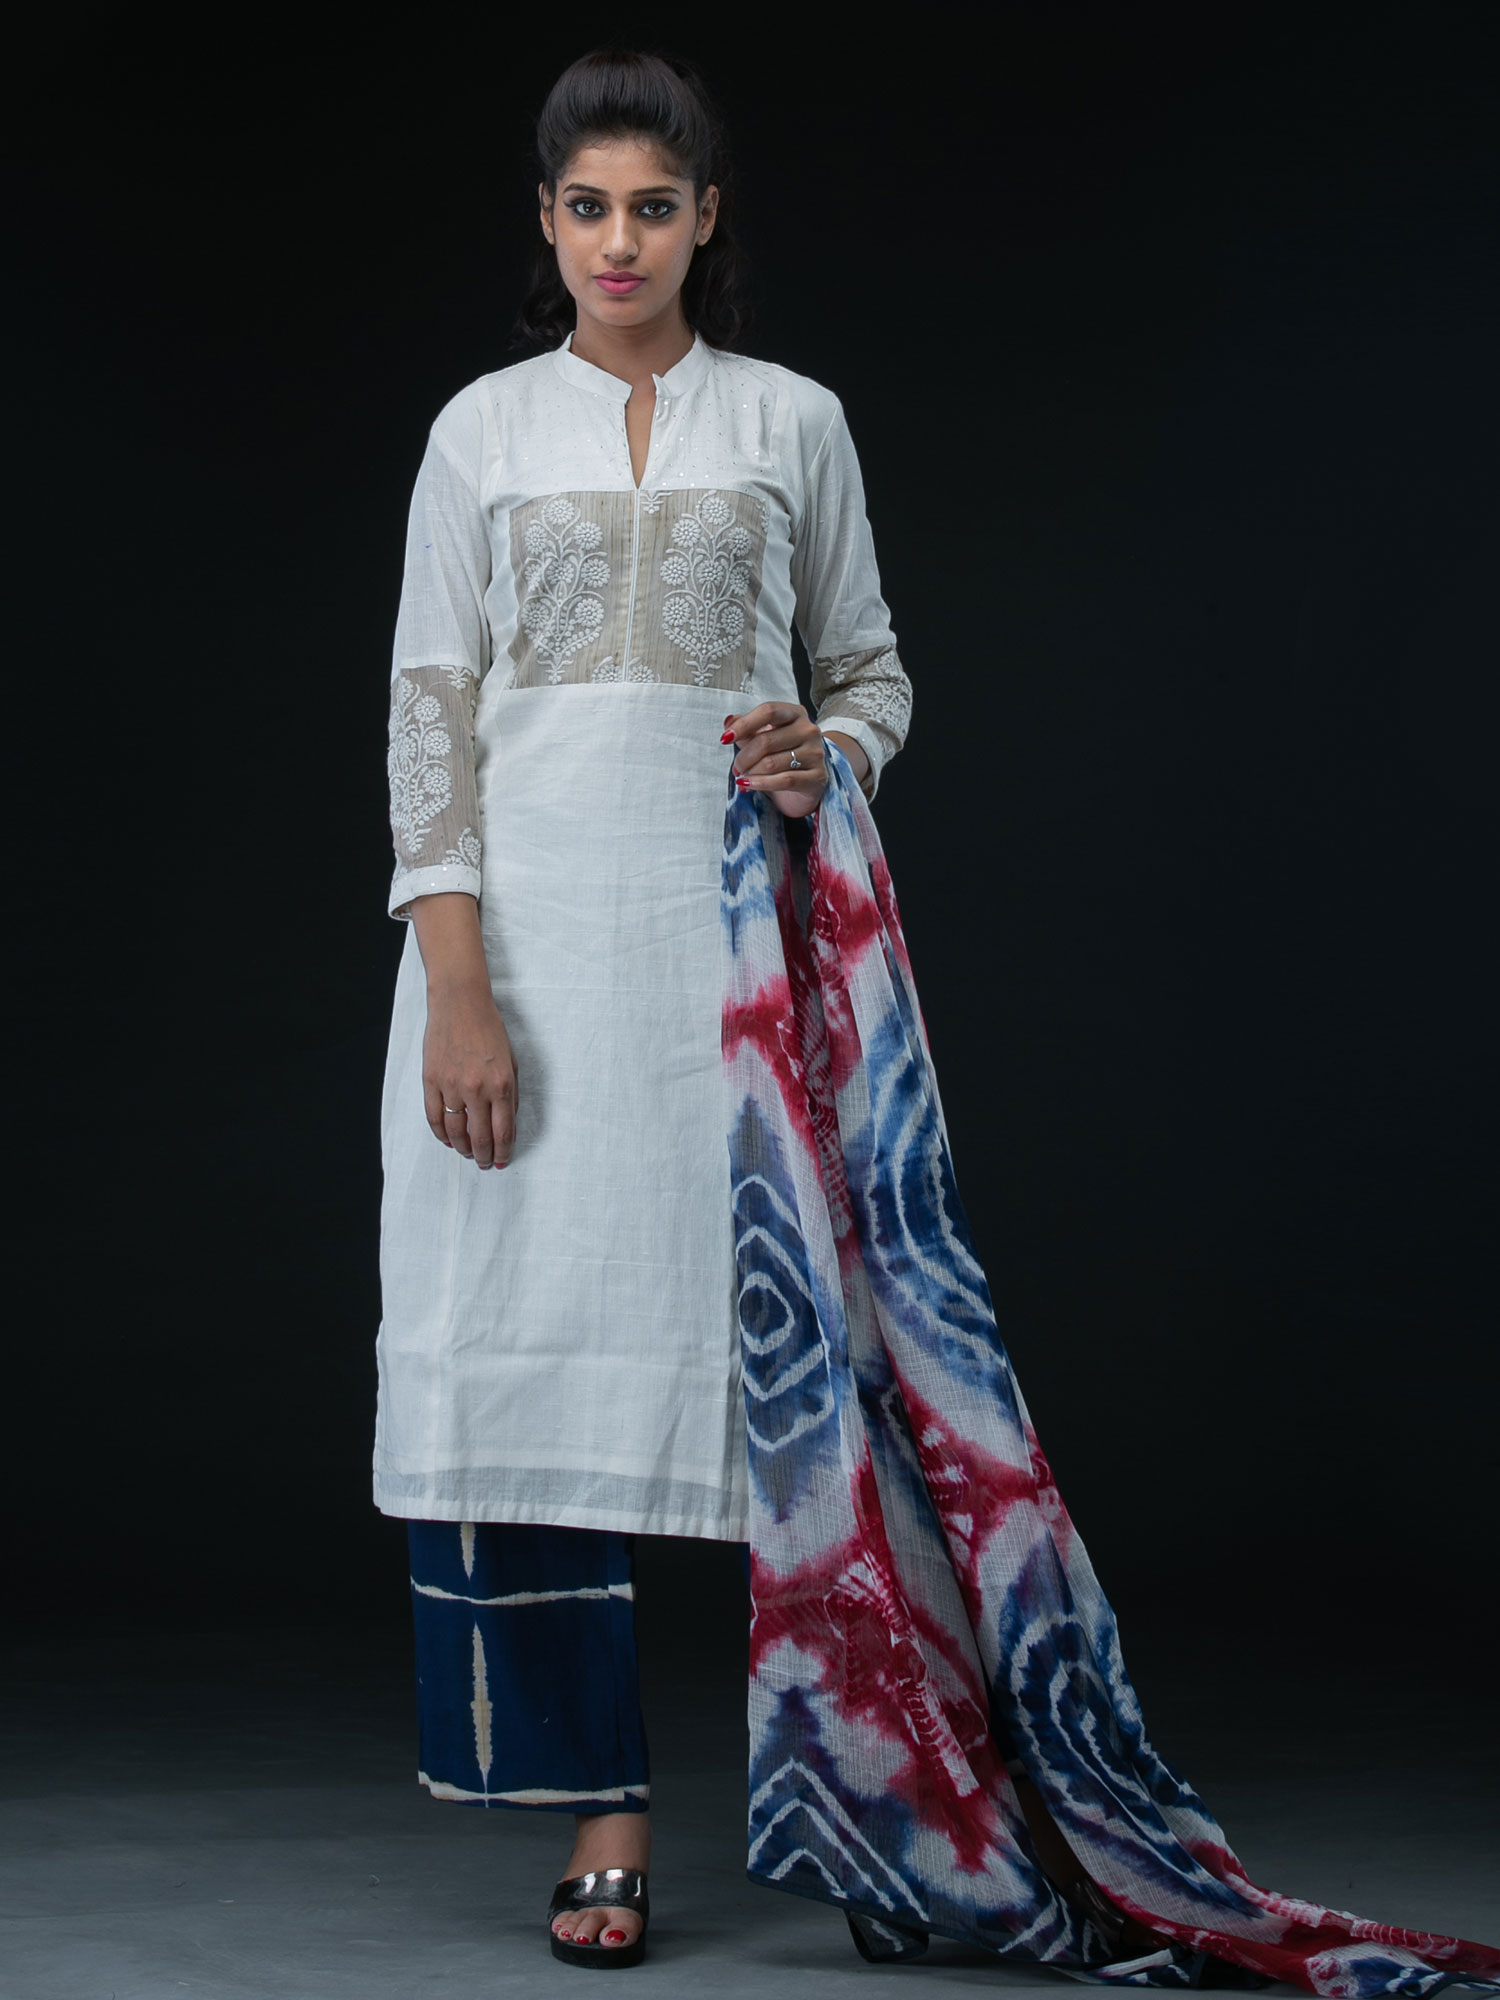 Trendy Indian Wear  Designer Kurtis Online for Women in hyderabad  Mamatha  Tulluri